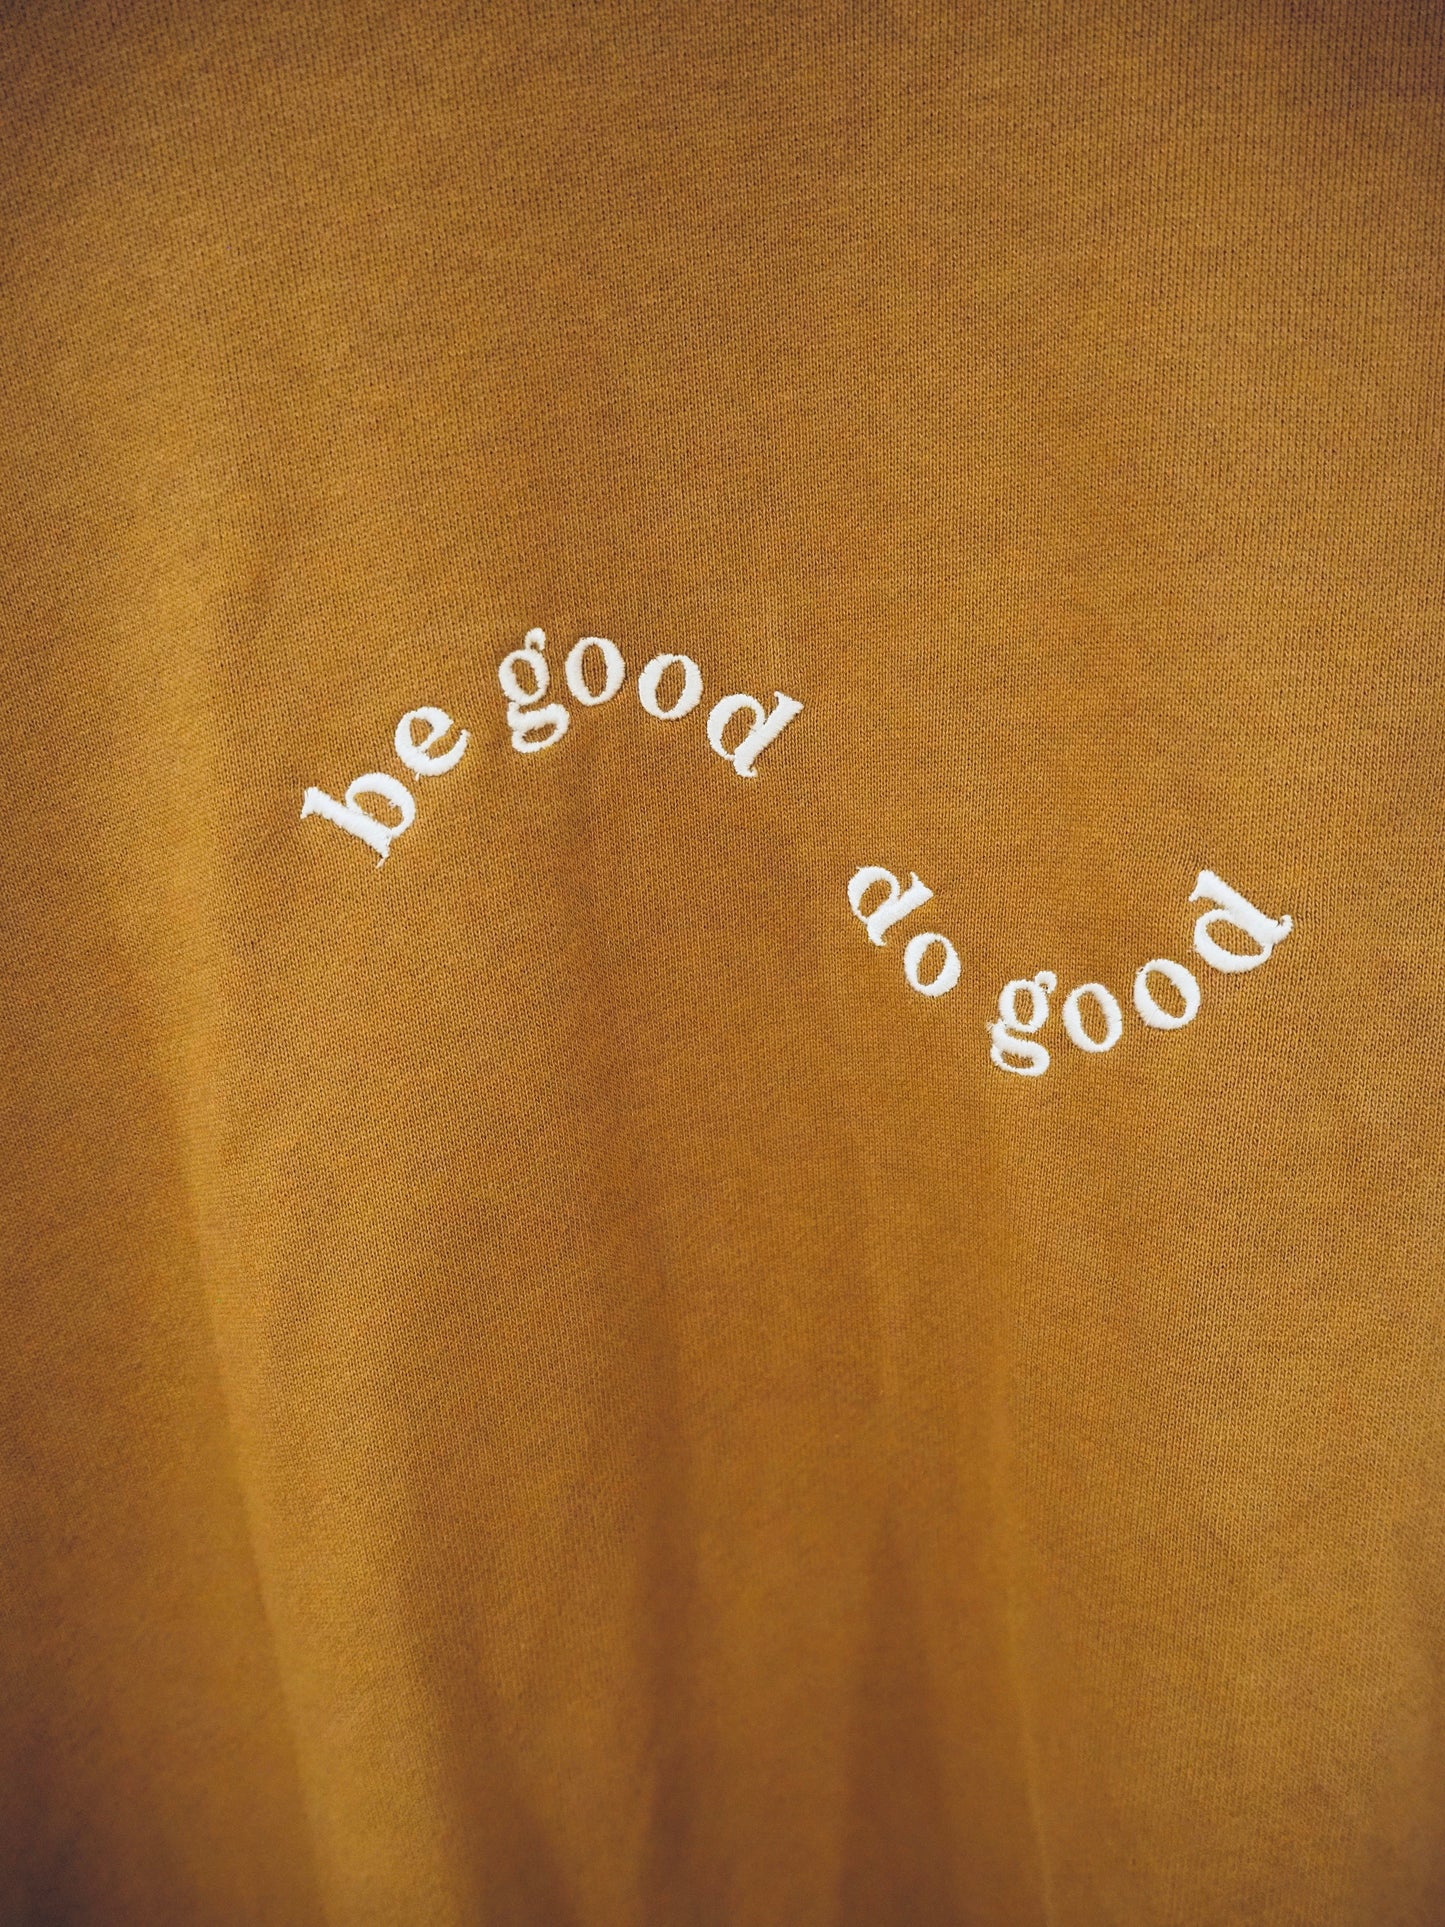 Be Good Do Good Sweatshirt